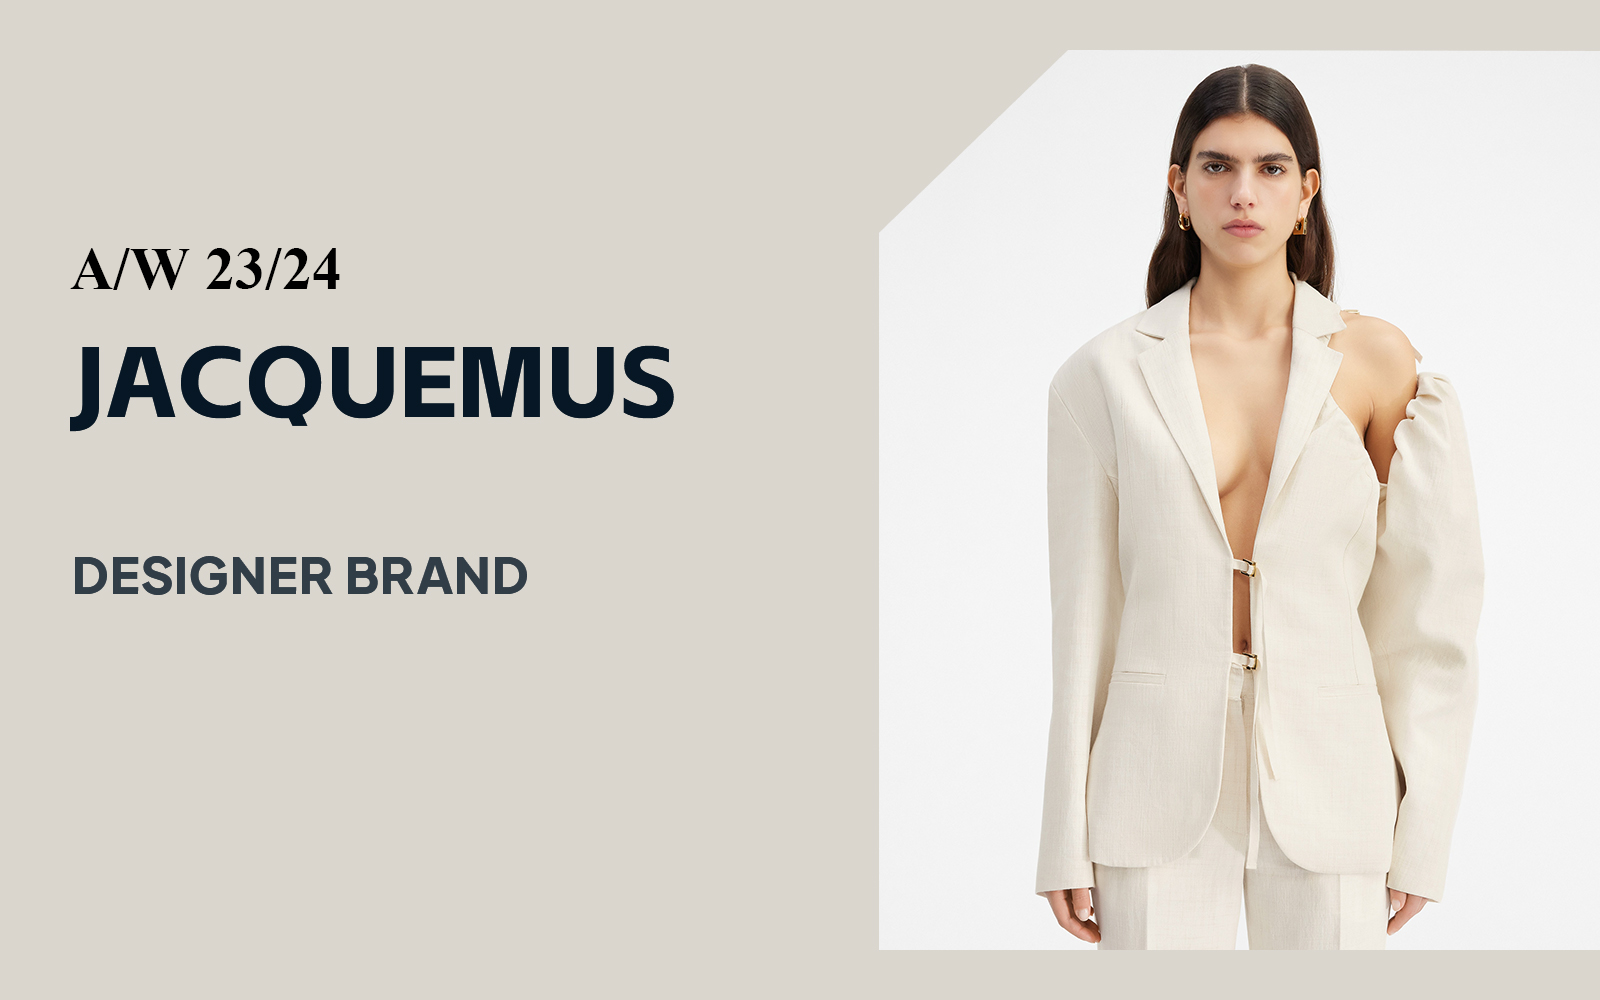 Sexy Elite -- The Analysis of Jacquemus The Womenswear Designer Brand